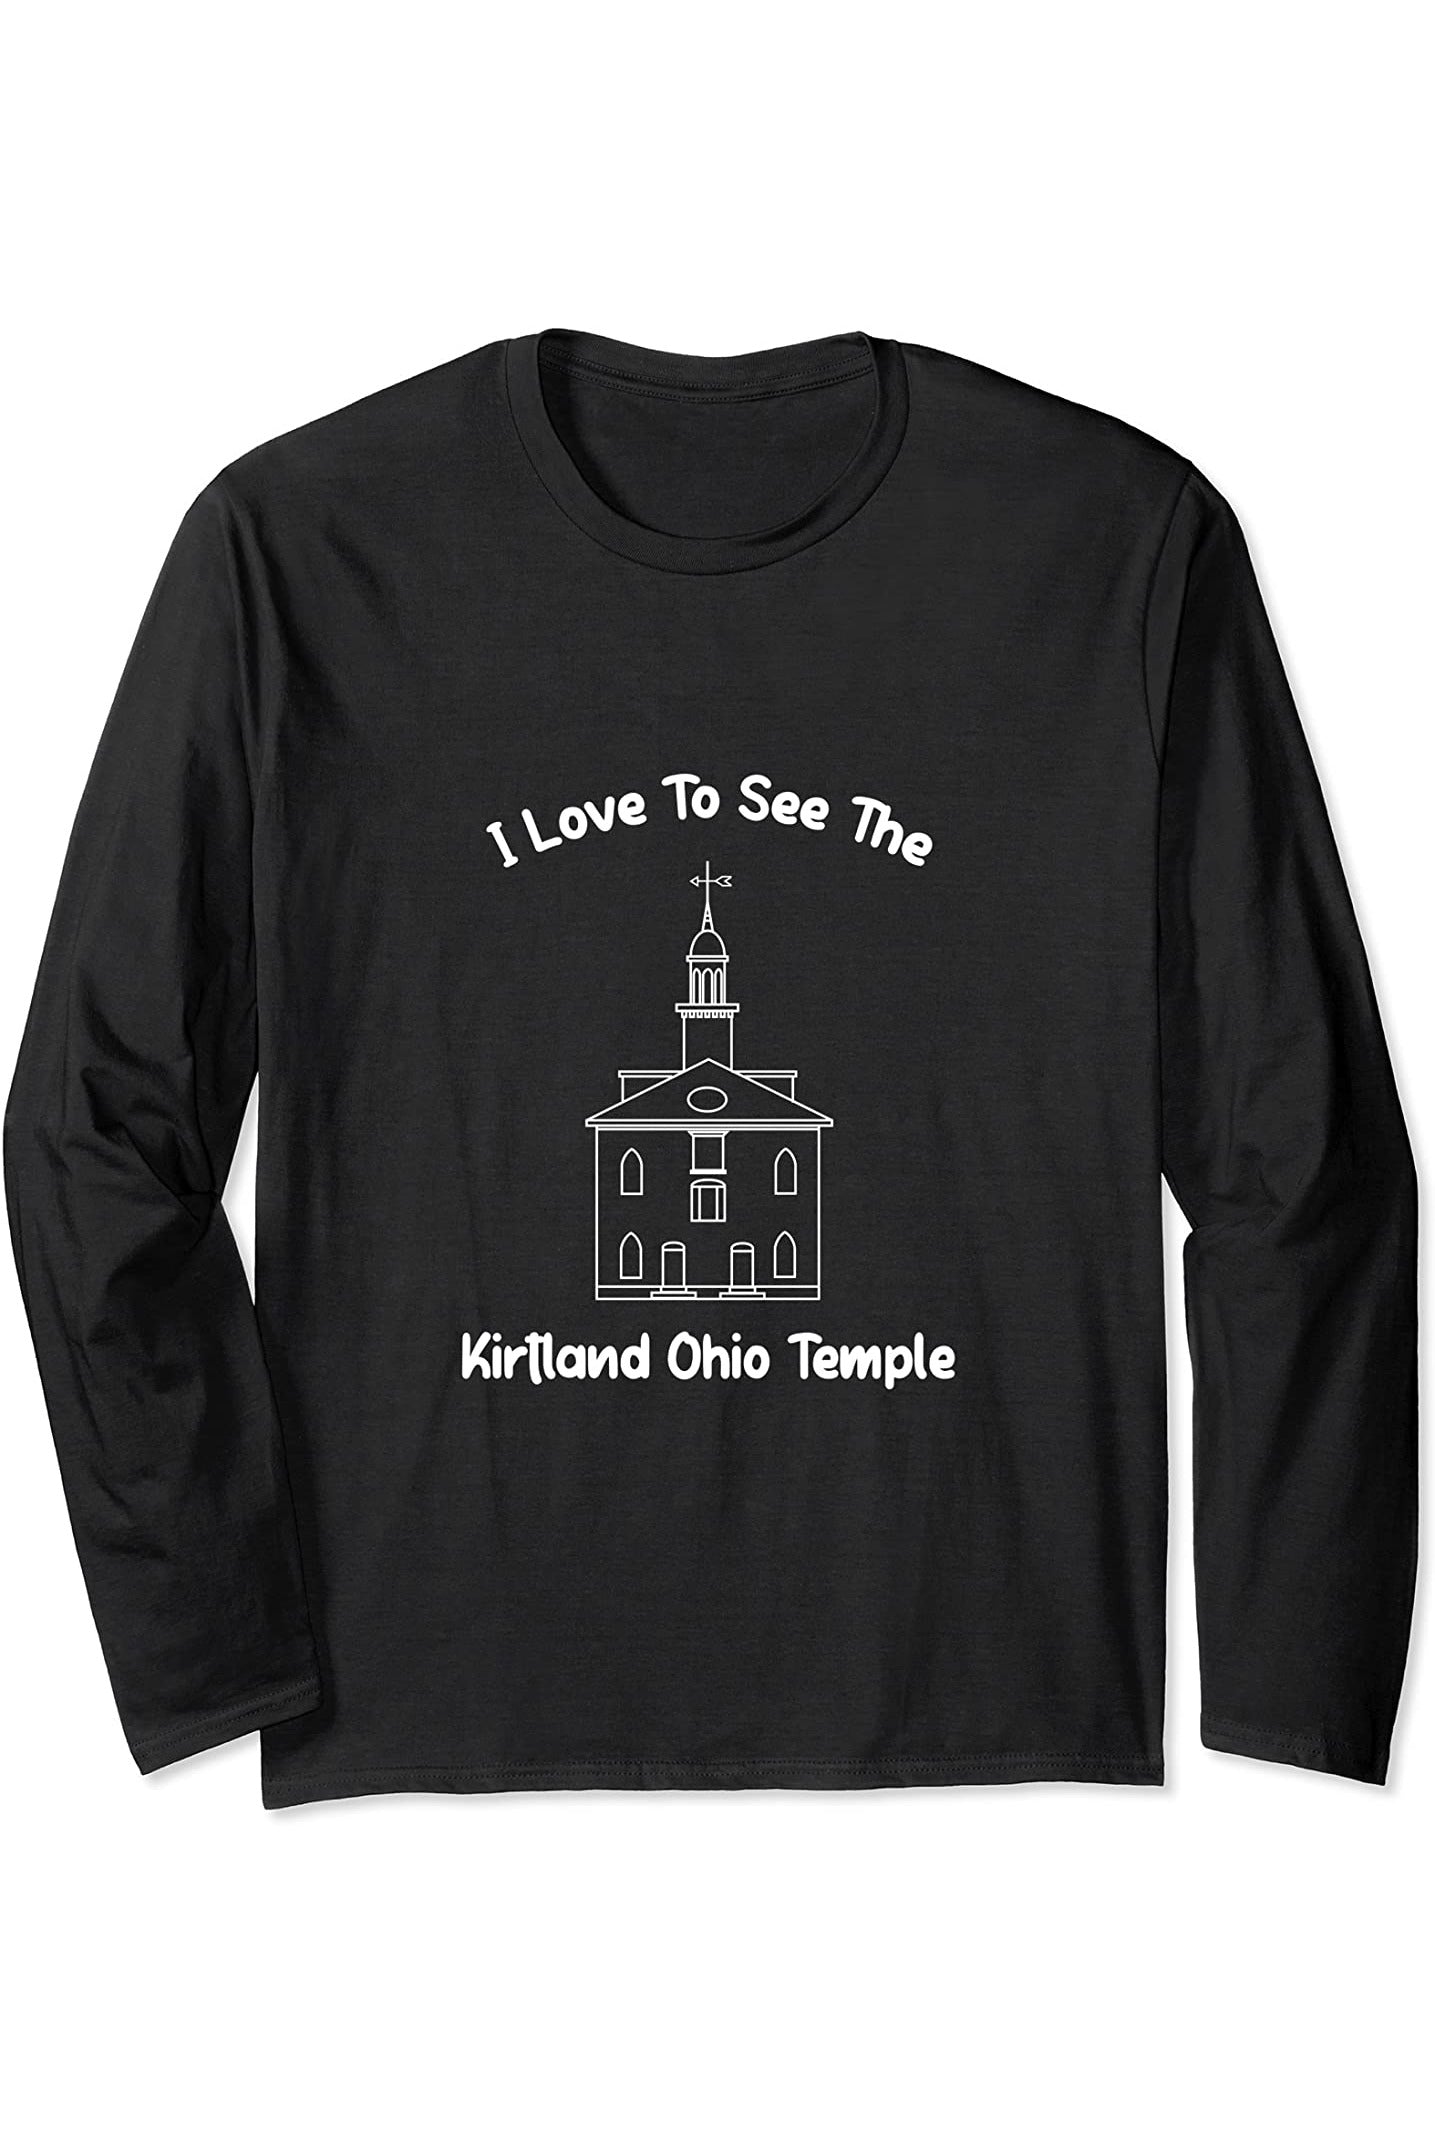 Kirtland Ohio Temple Long Sleeve T-Shirt - Primary Style (English) US